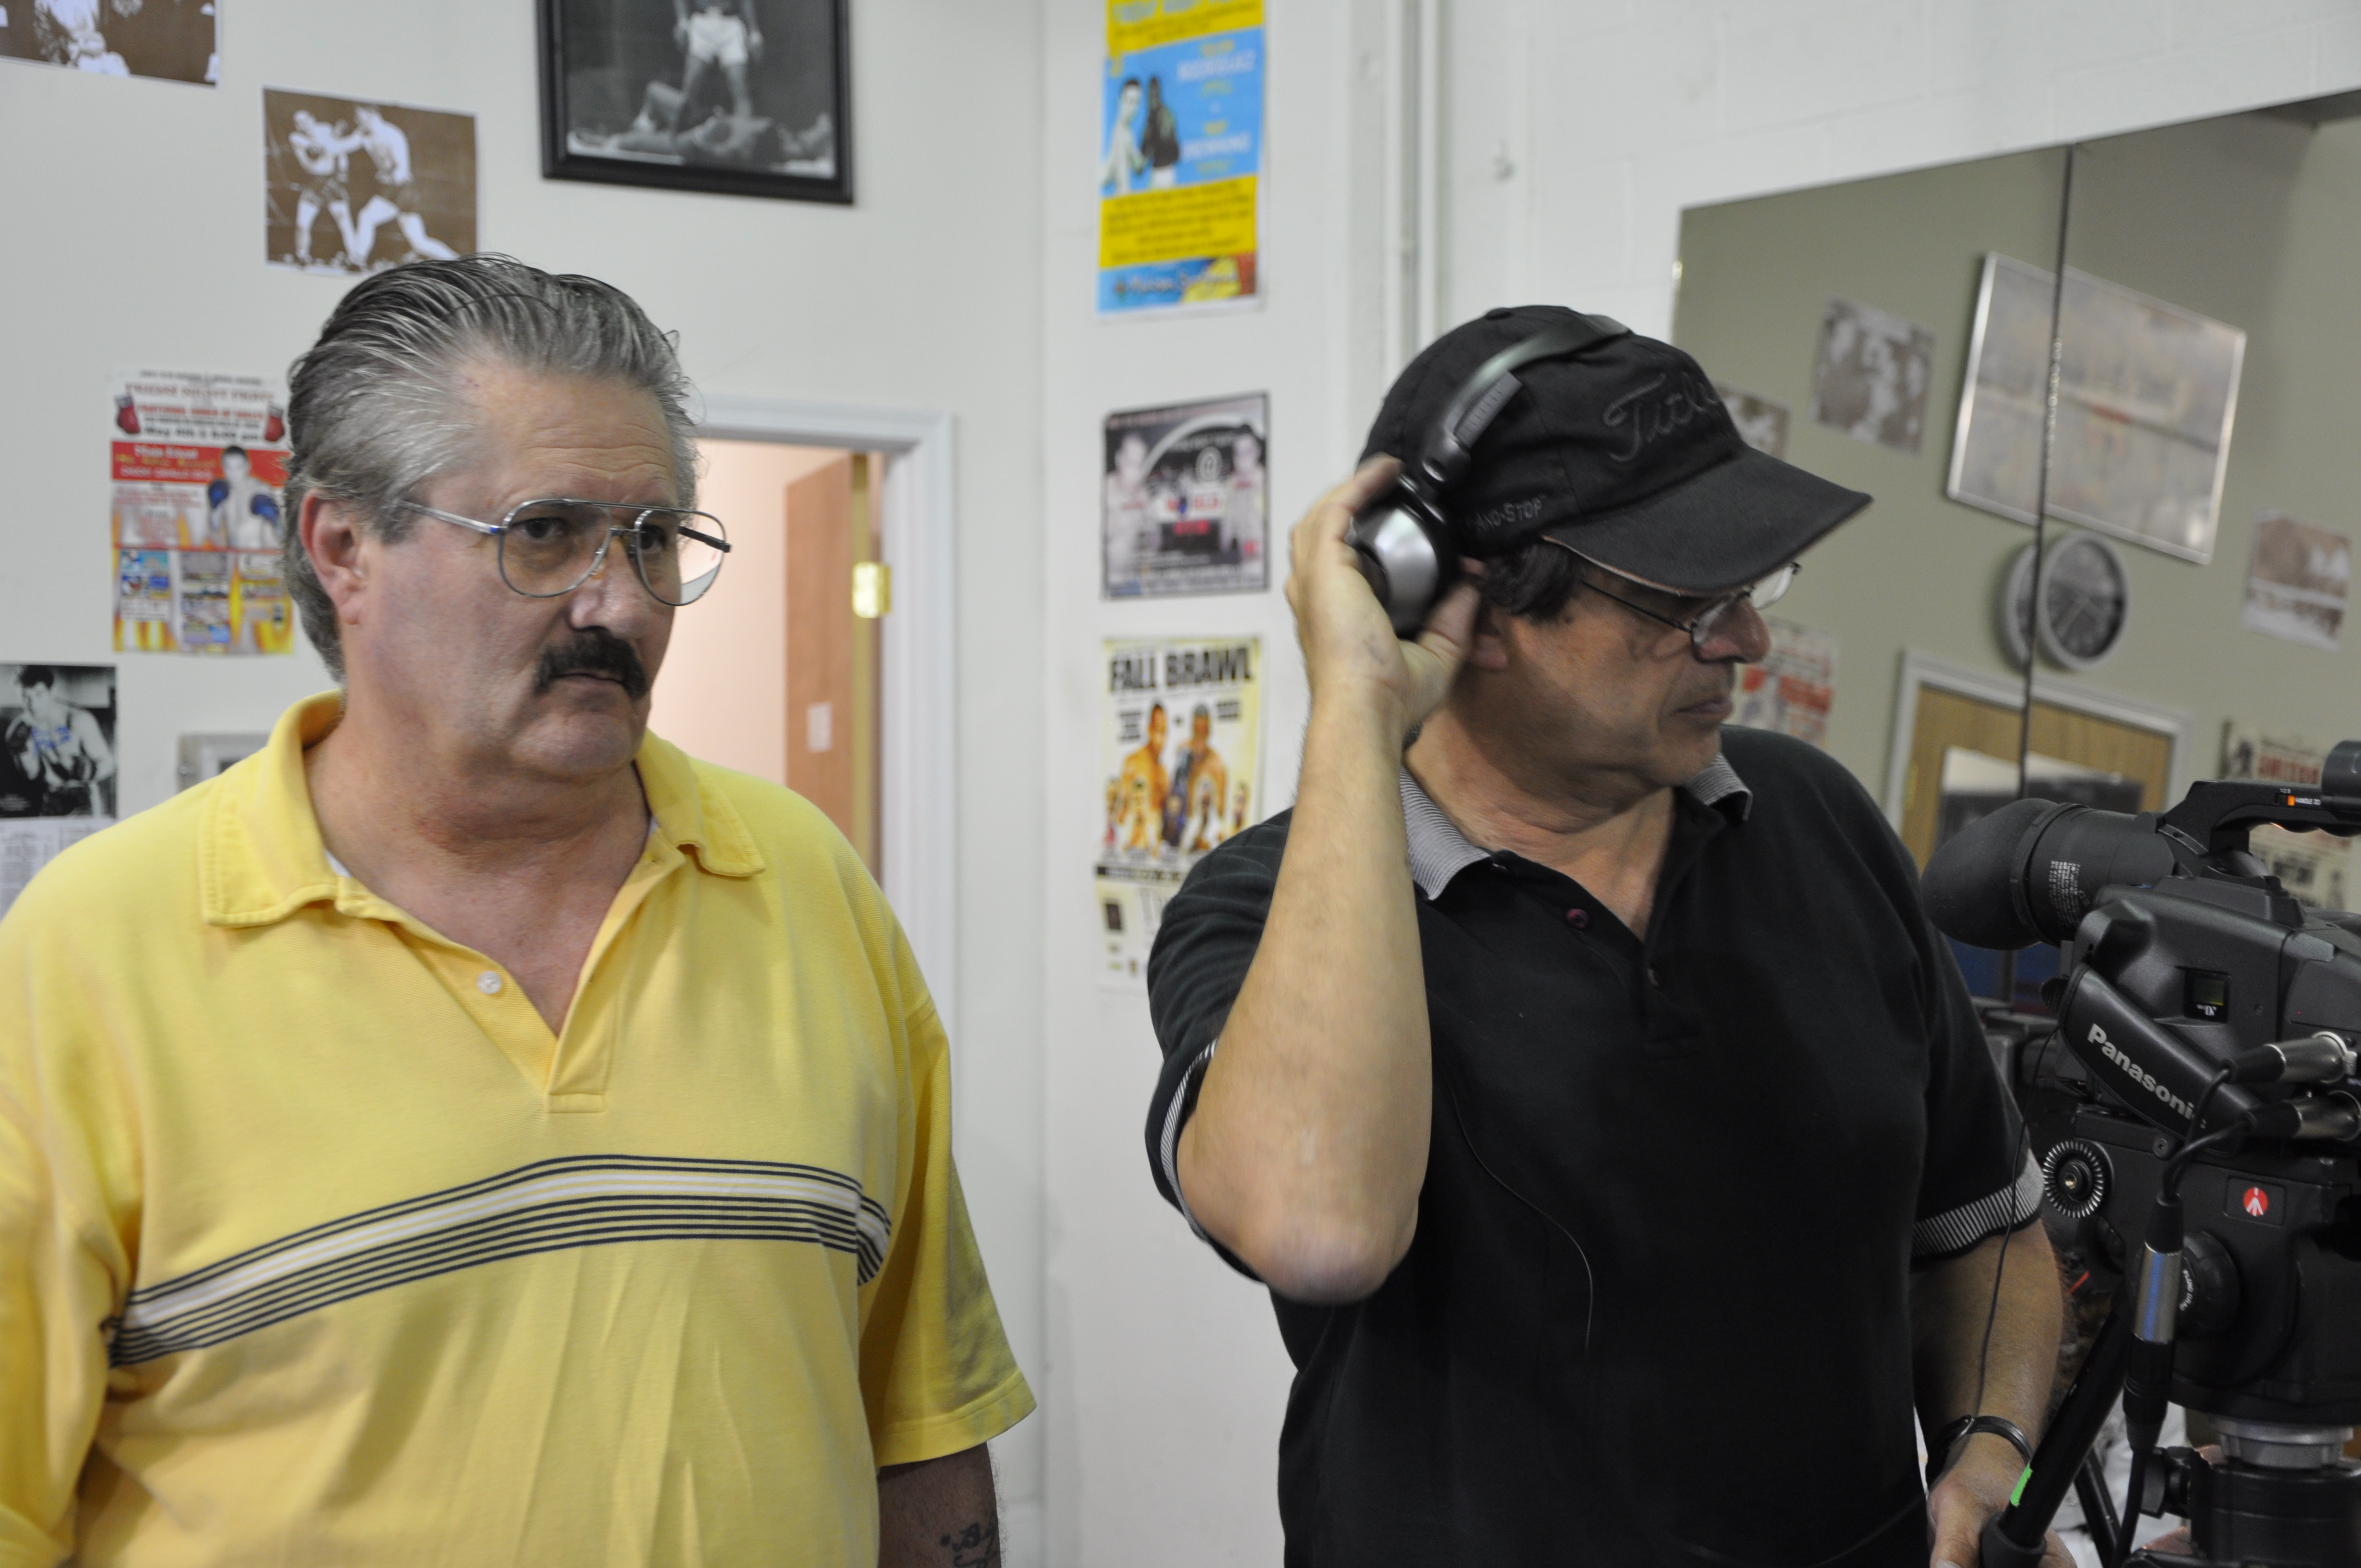 Robert Bizik & Sonny Vellozzi working the sound & camera for 